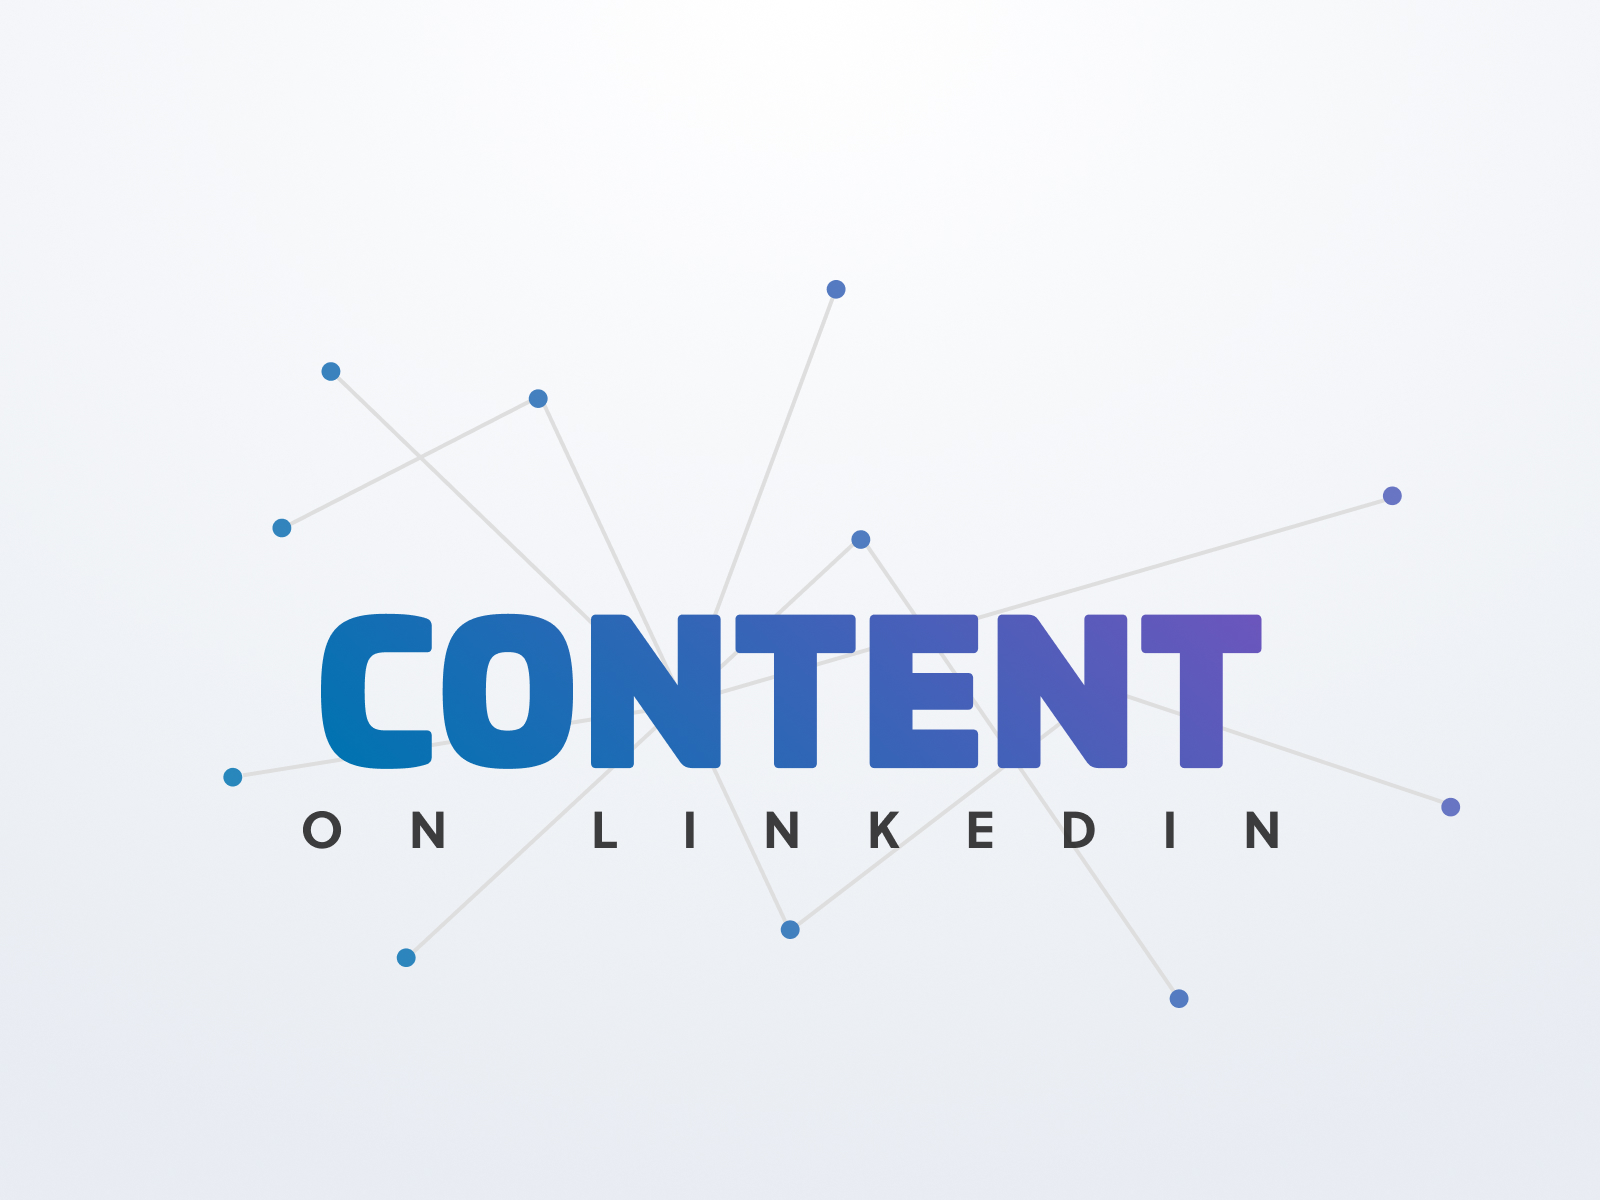 Content ecosystem on LinkedIn